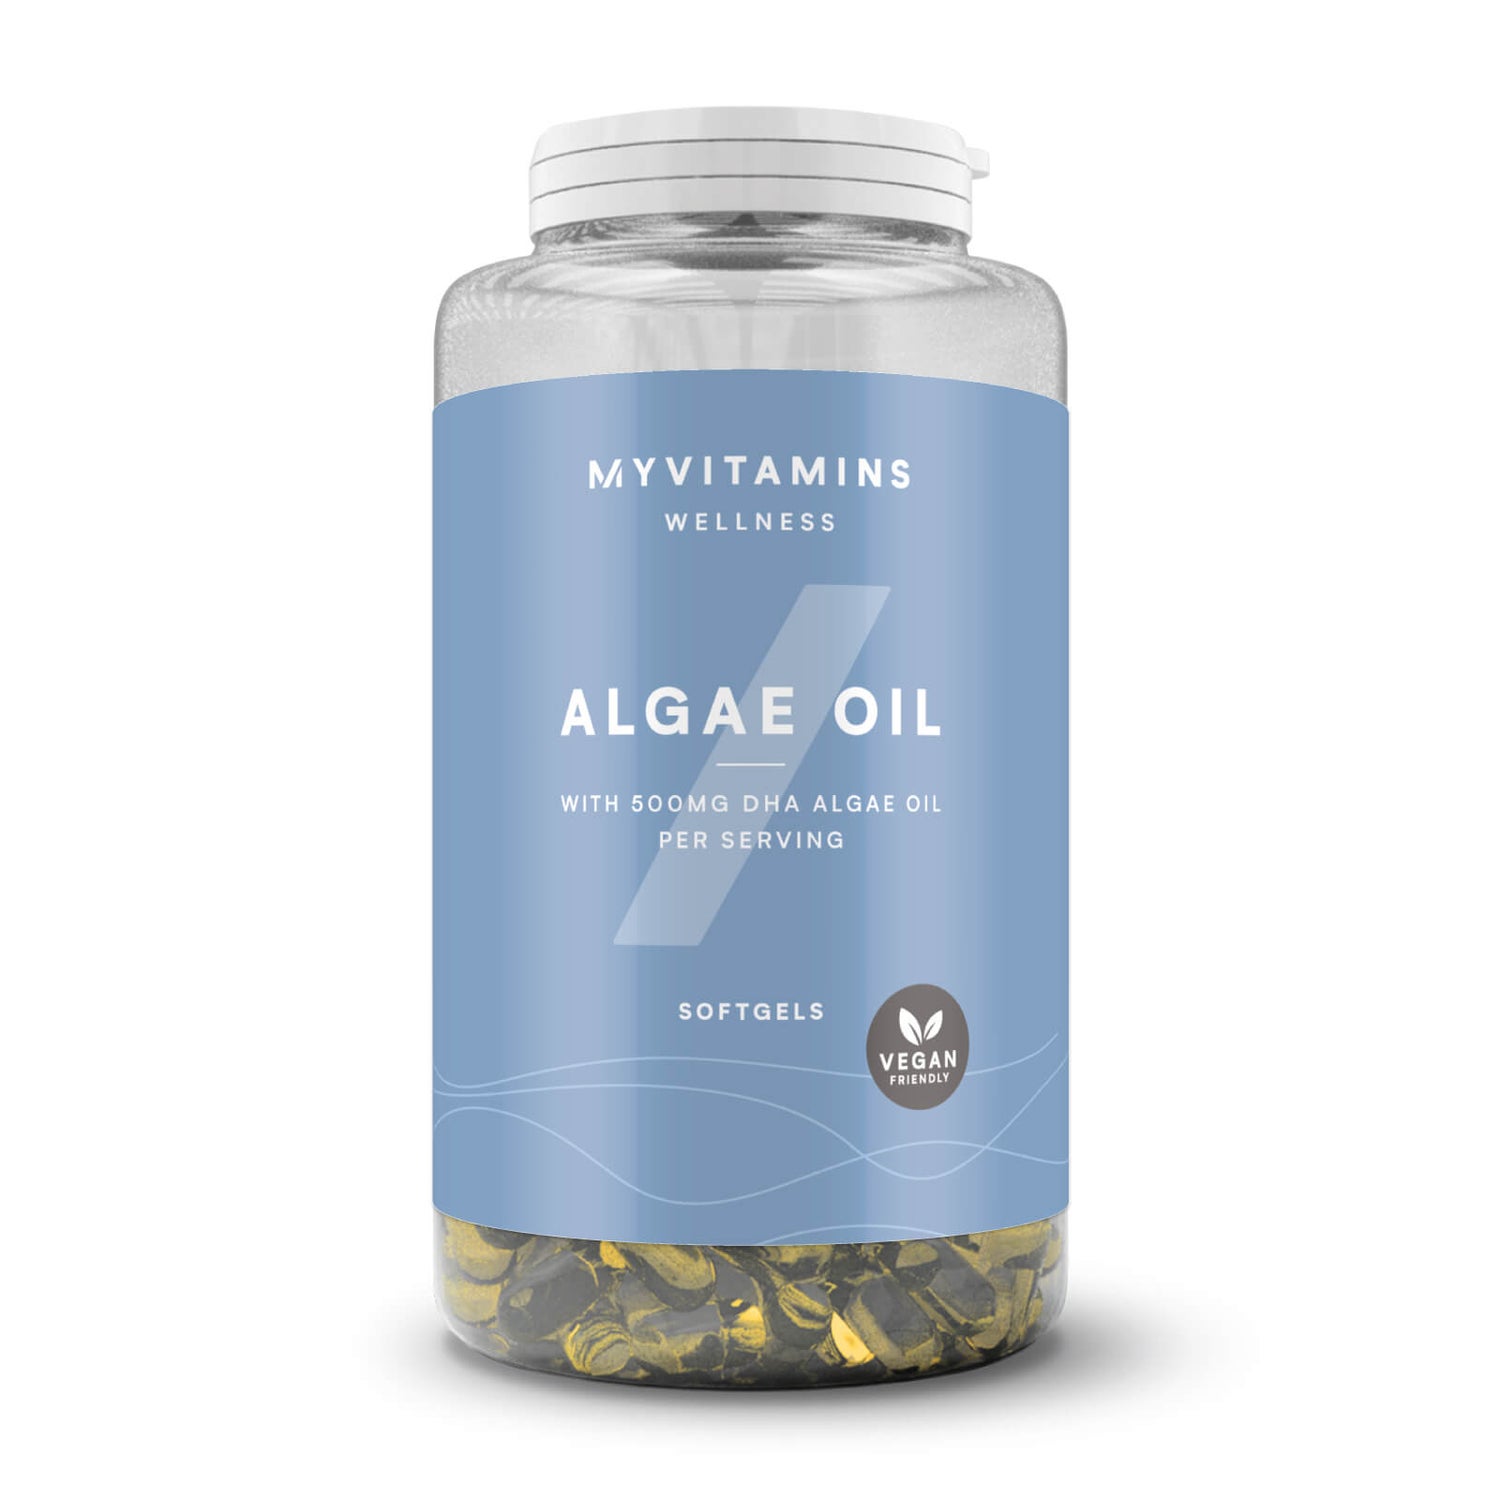 Myvitamins Algae Oil - 30softgels